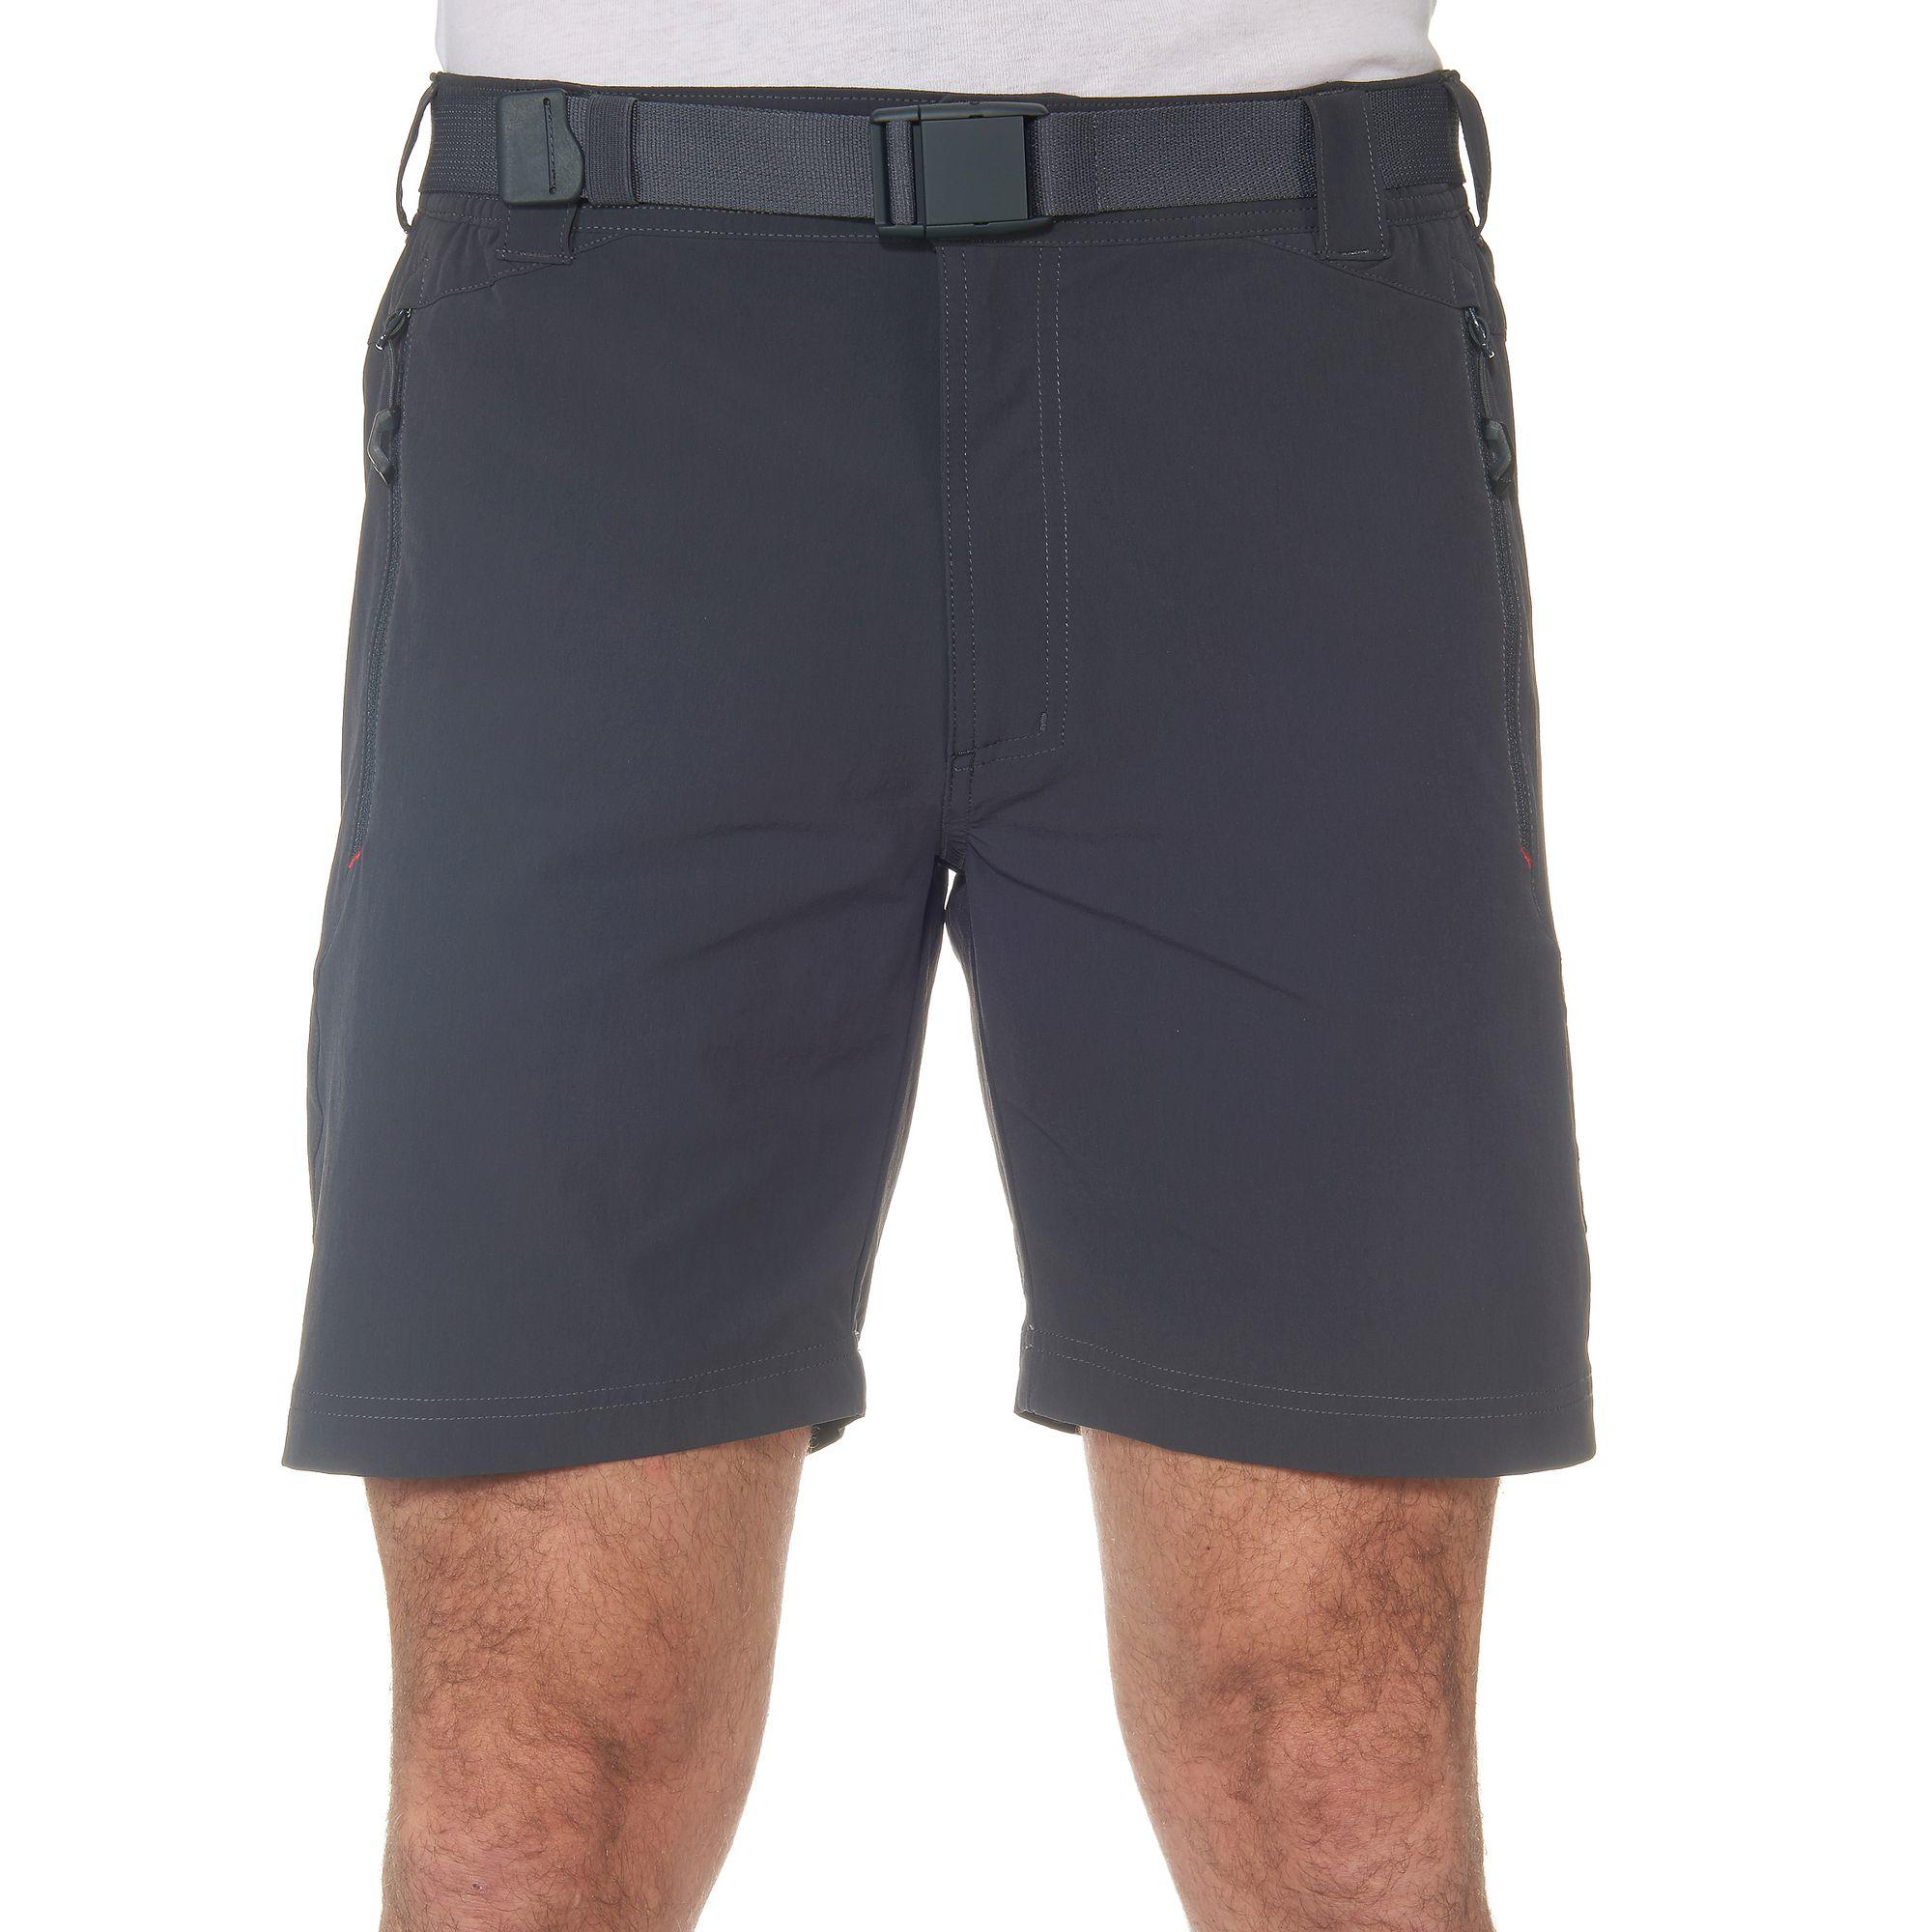 Forclaz 500 hiking shorts - Dark Grey 4/14